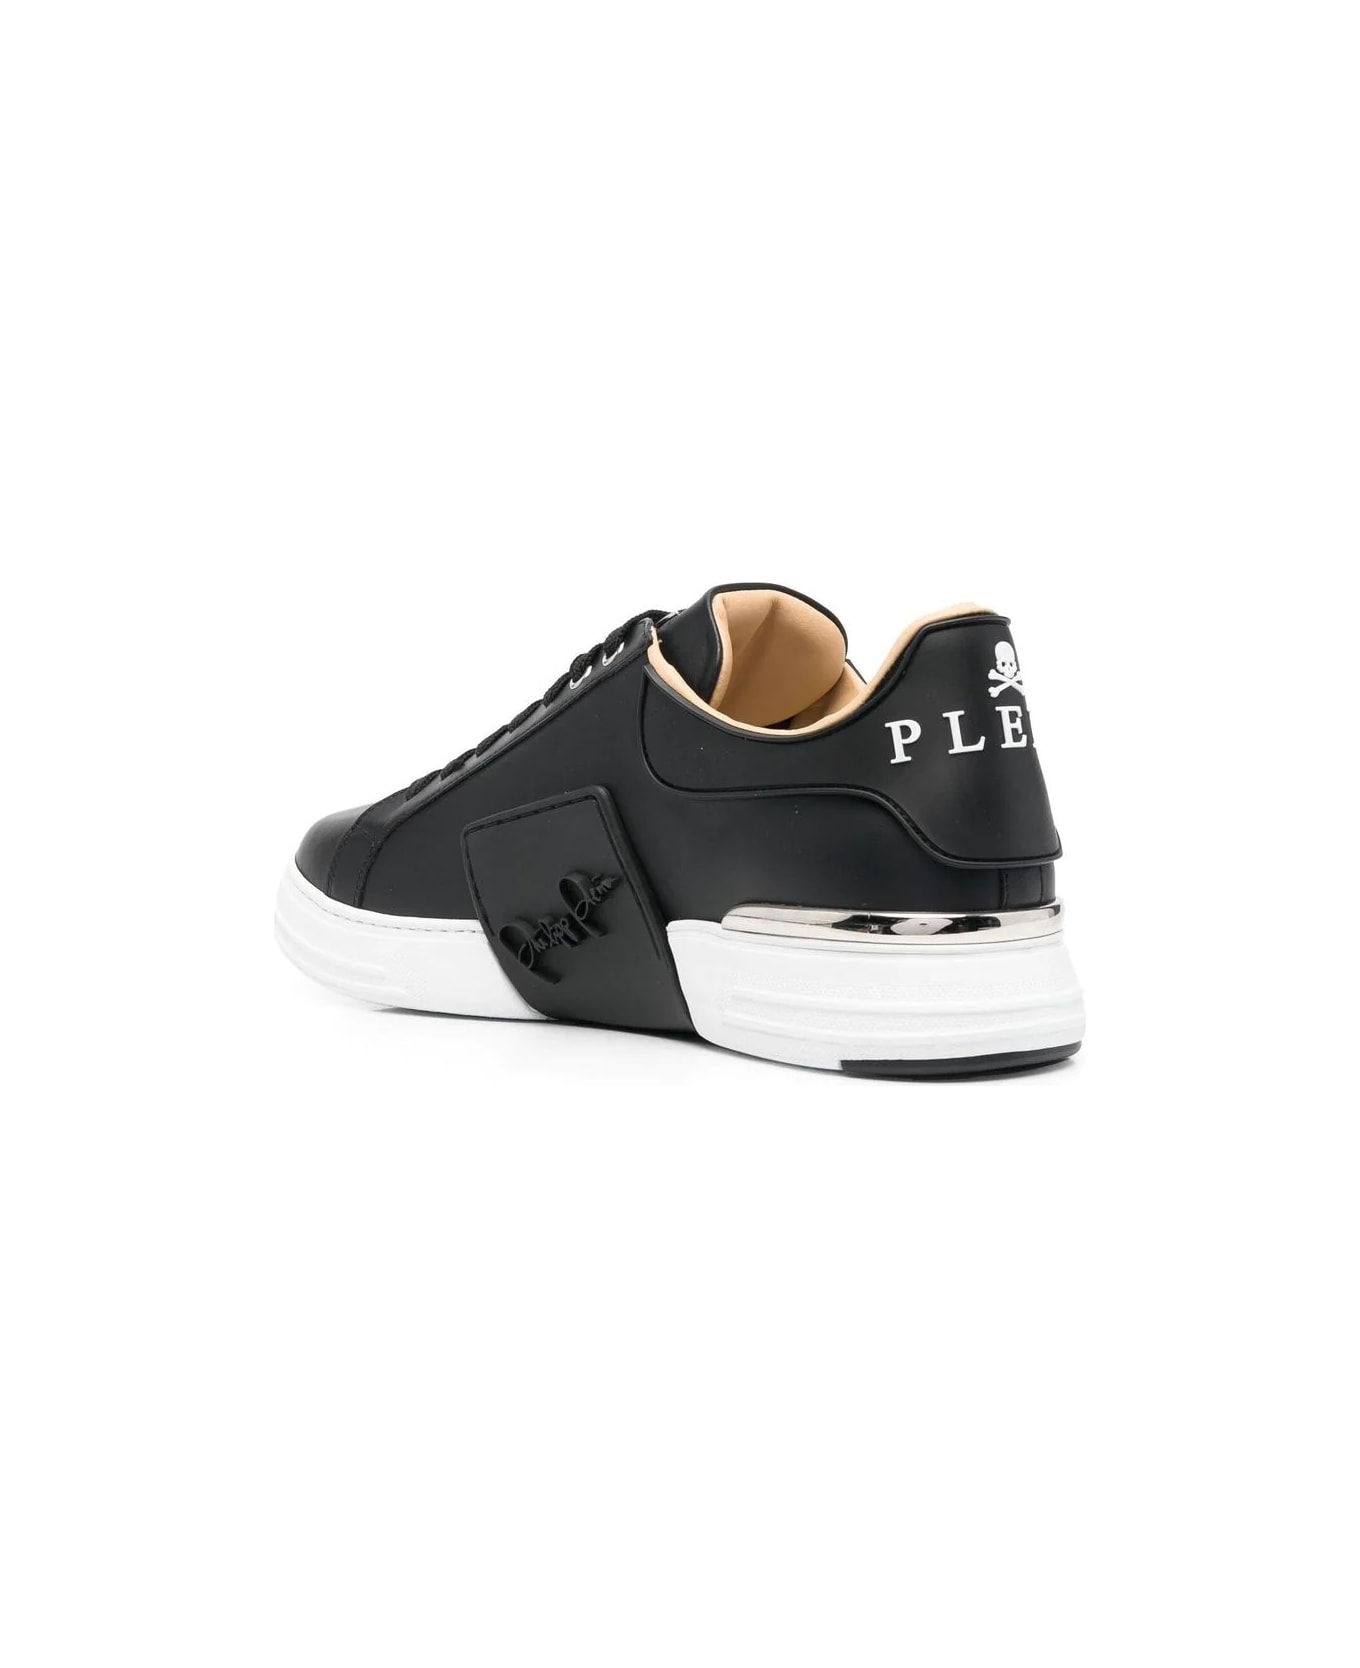 Philipp Plein Hexagon Sneakers In Black Leather - Black